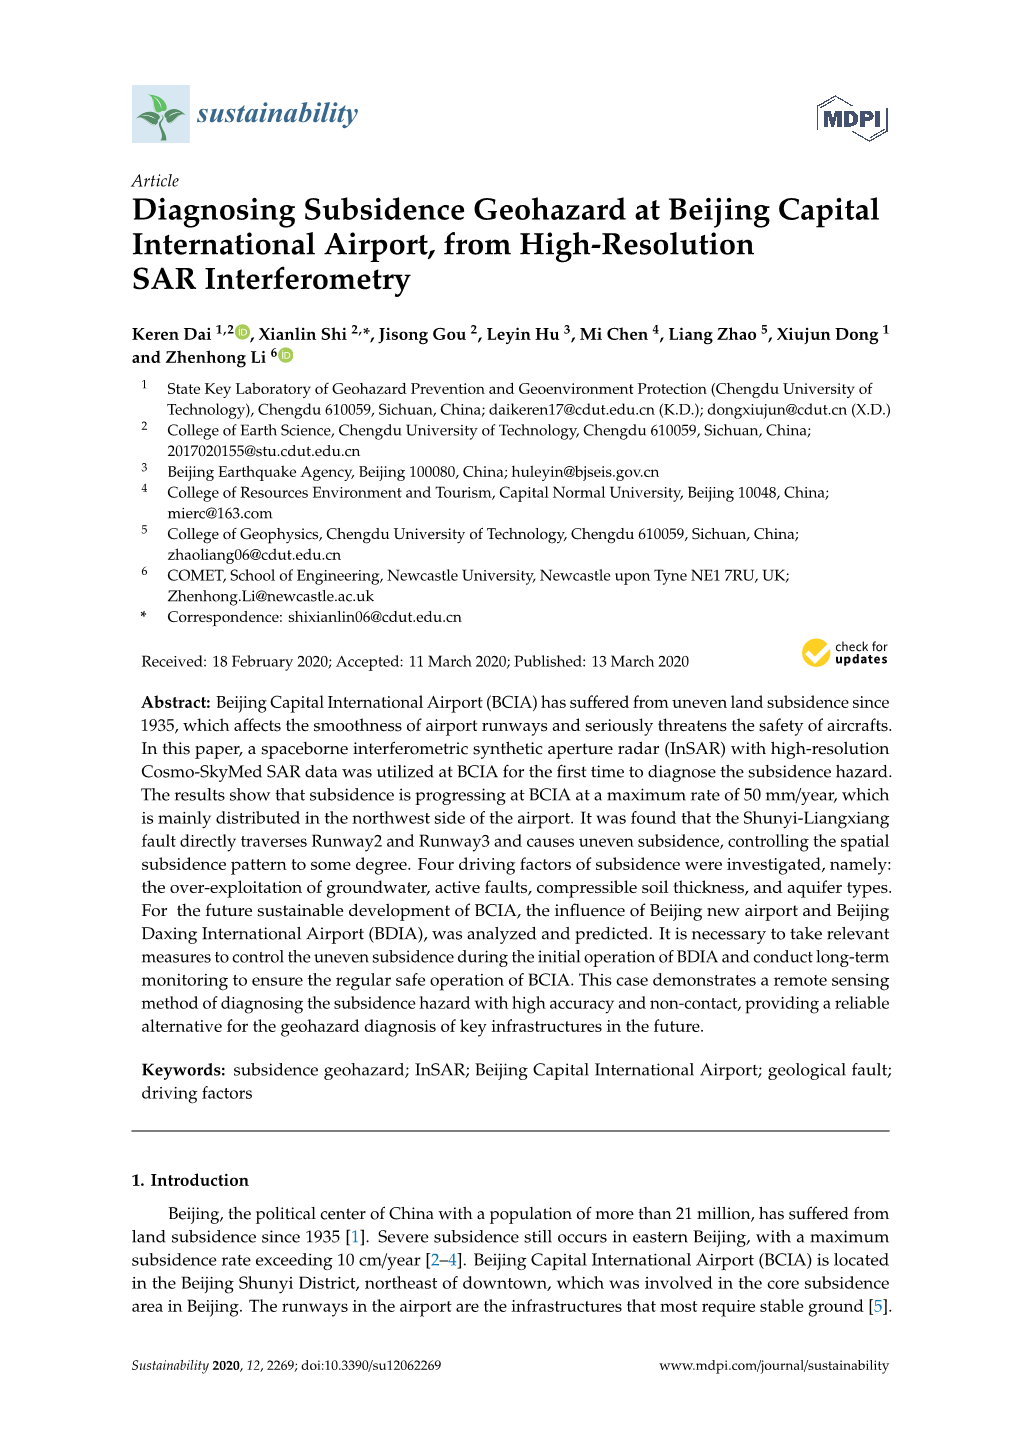 Diagnosing Subsidence Geohazard at Beijing Capital International Airport, from High-Resolution SAR Interferometry